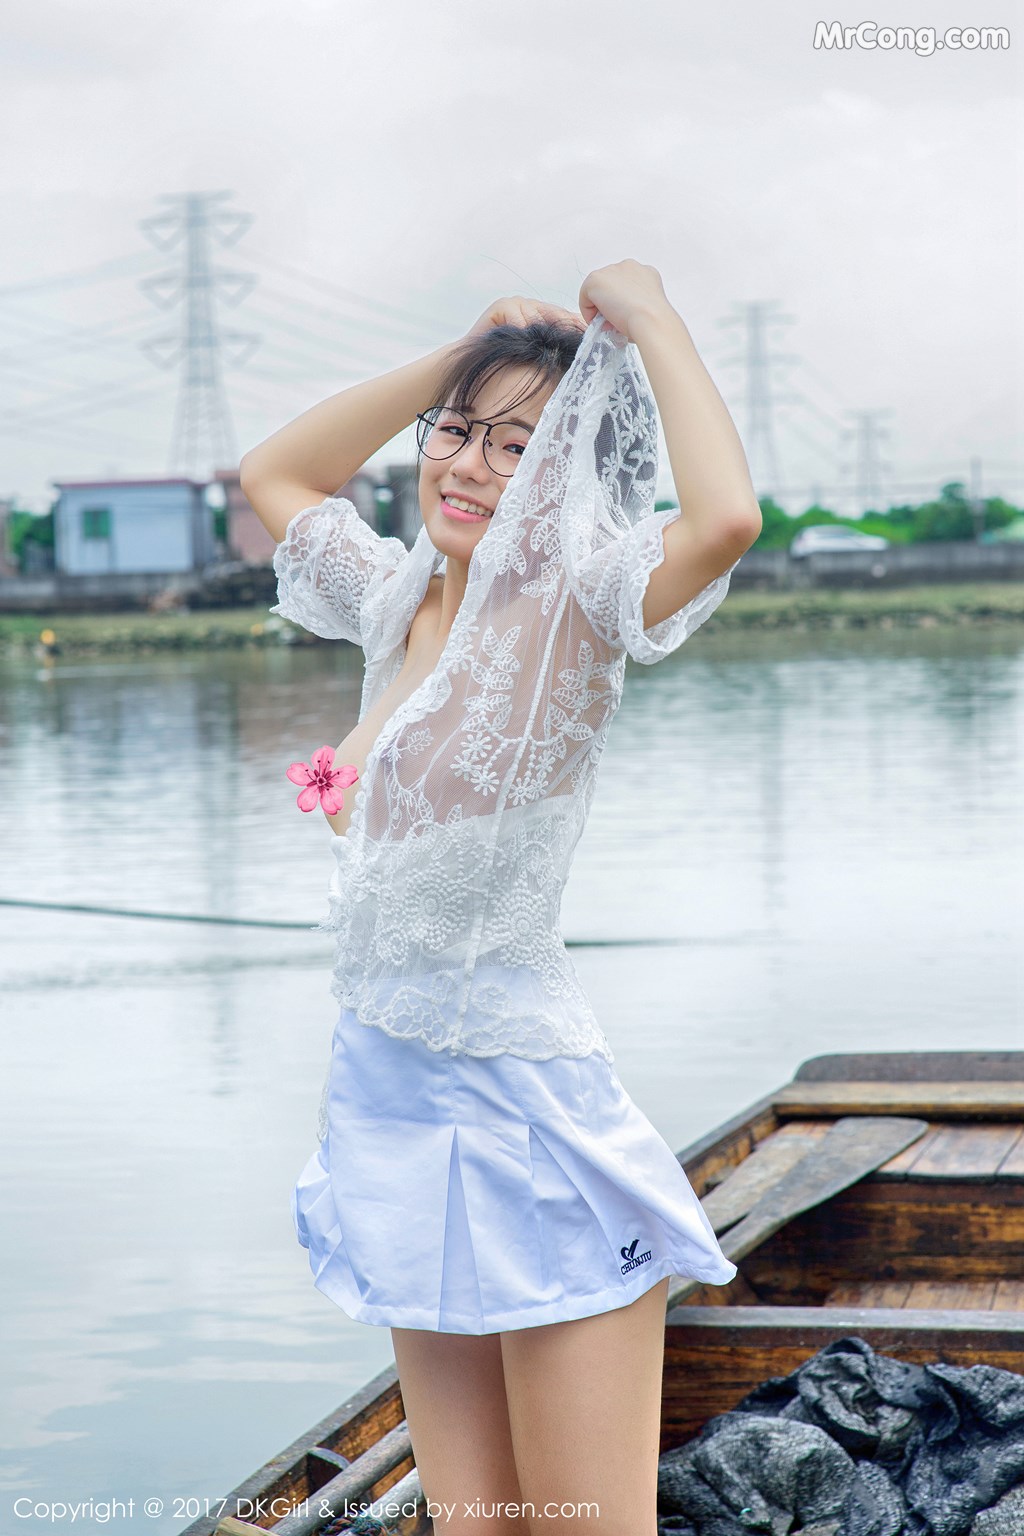 DKGirl Vol.051: Model Cang Jing You Xiang (仓 井 优香) (58 photos)